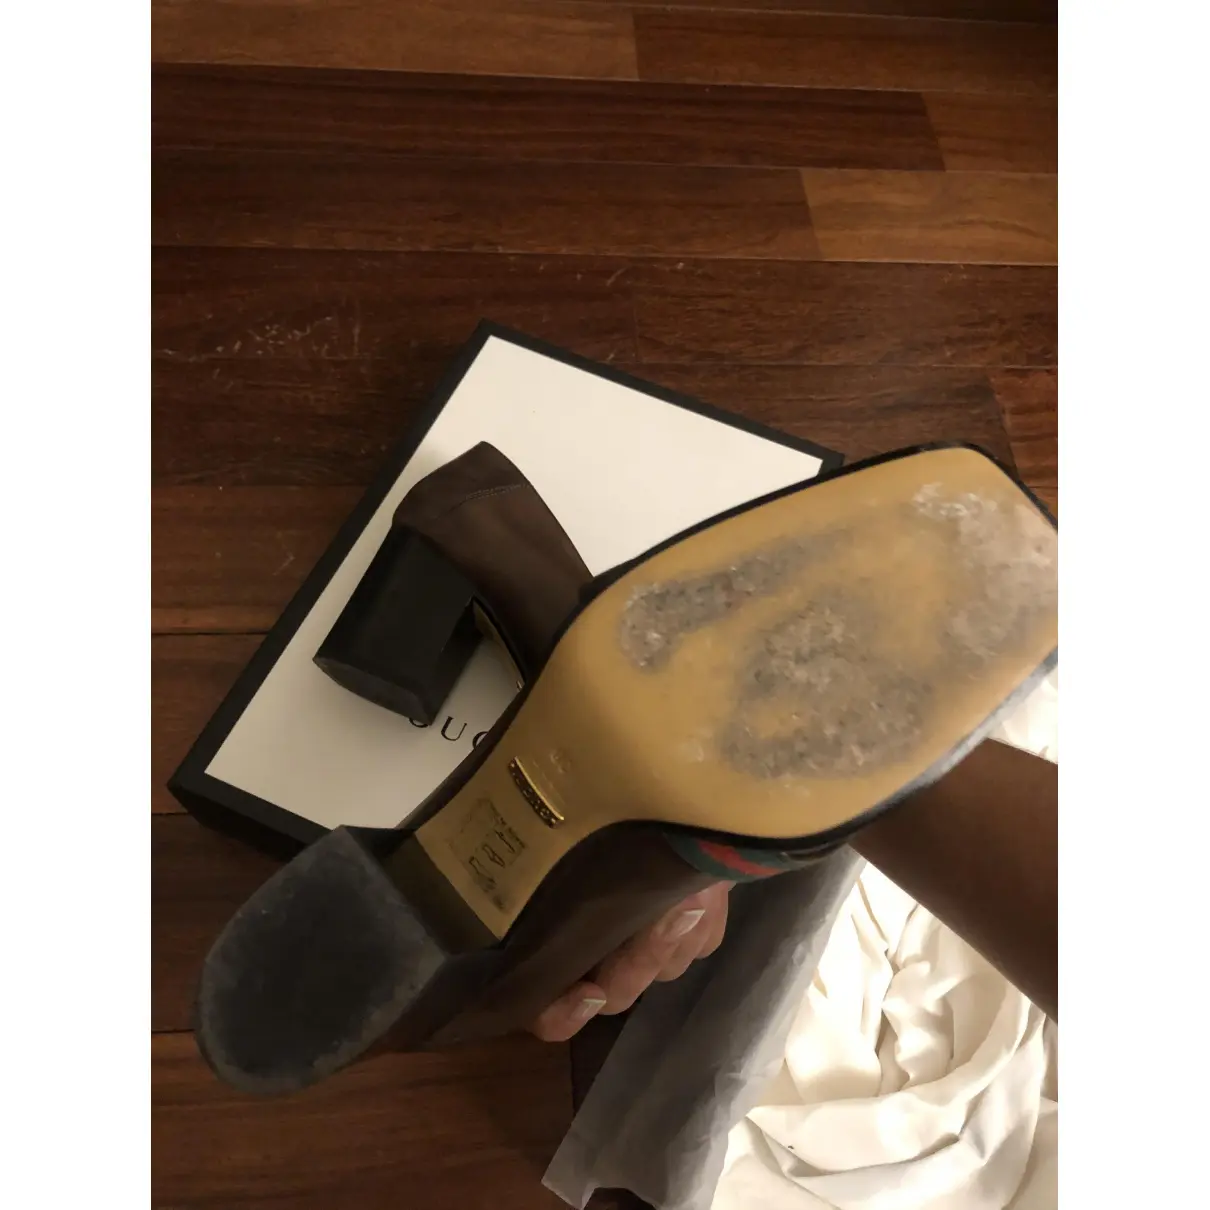 Peyton leather heels Gucci